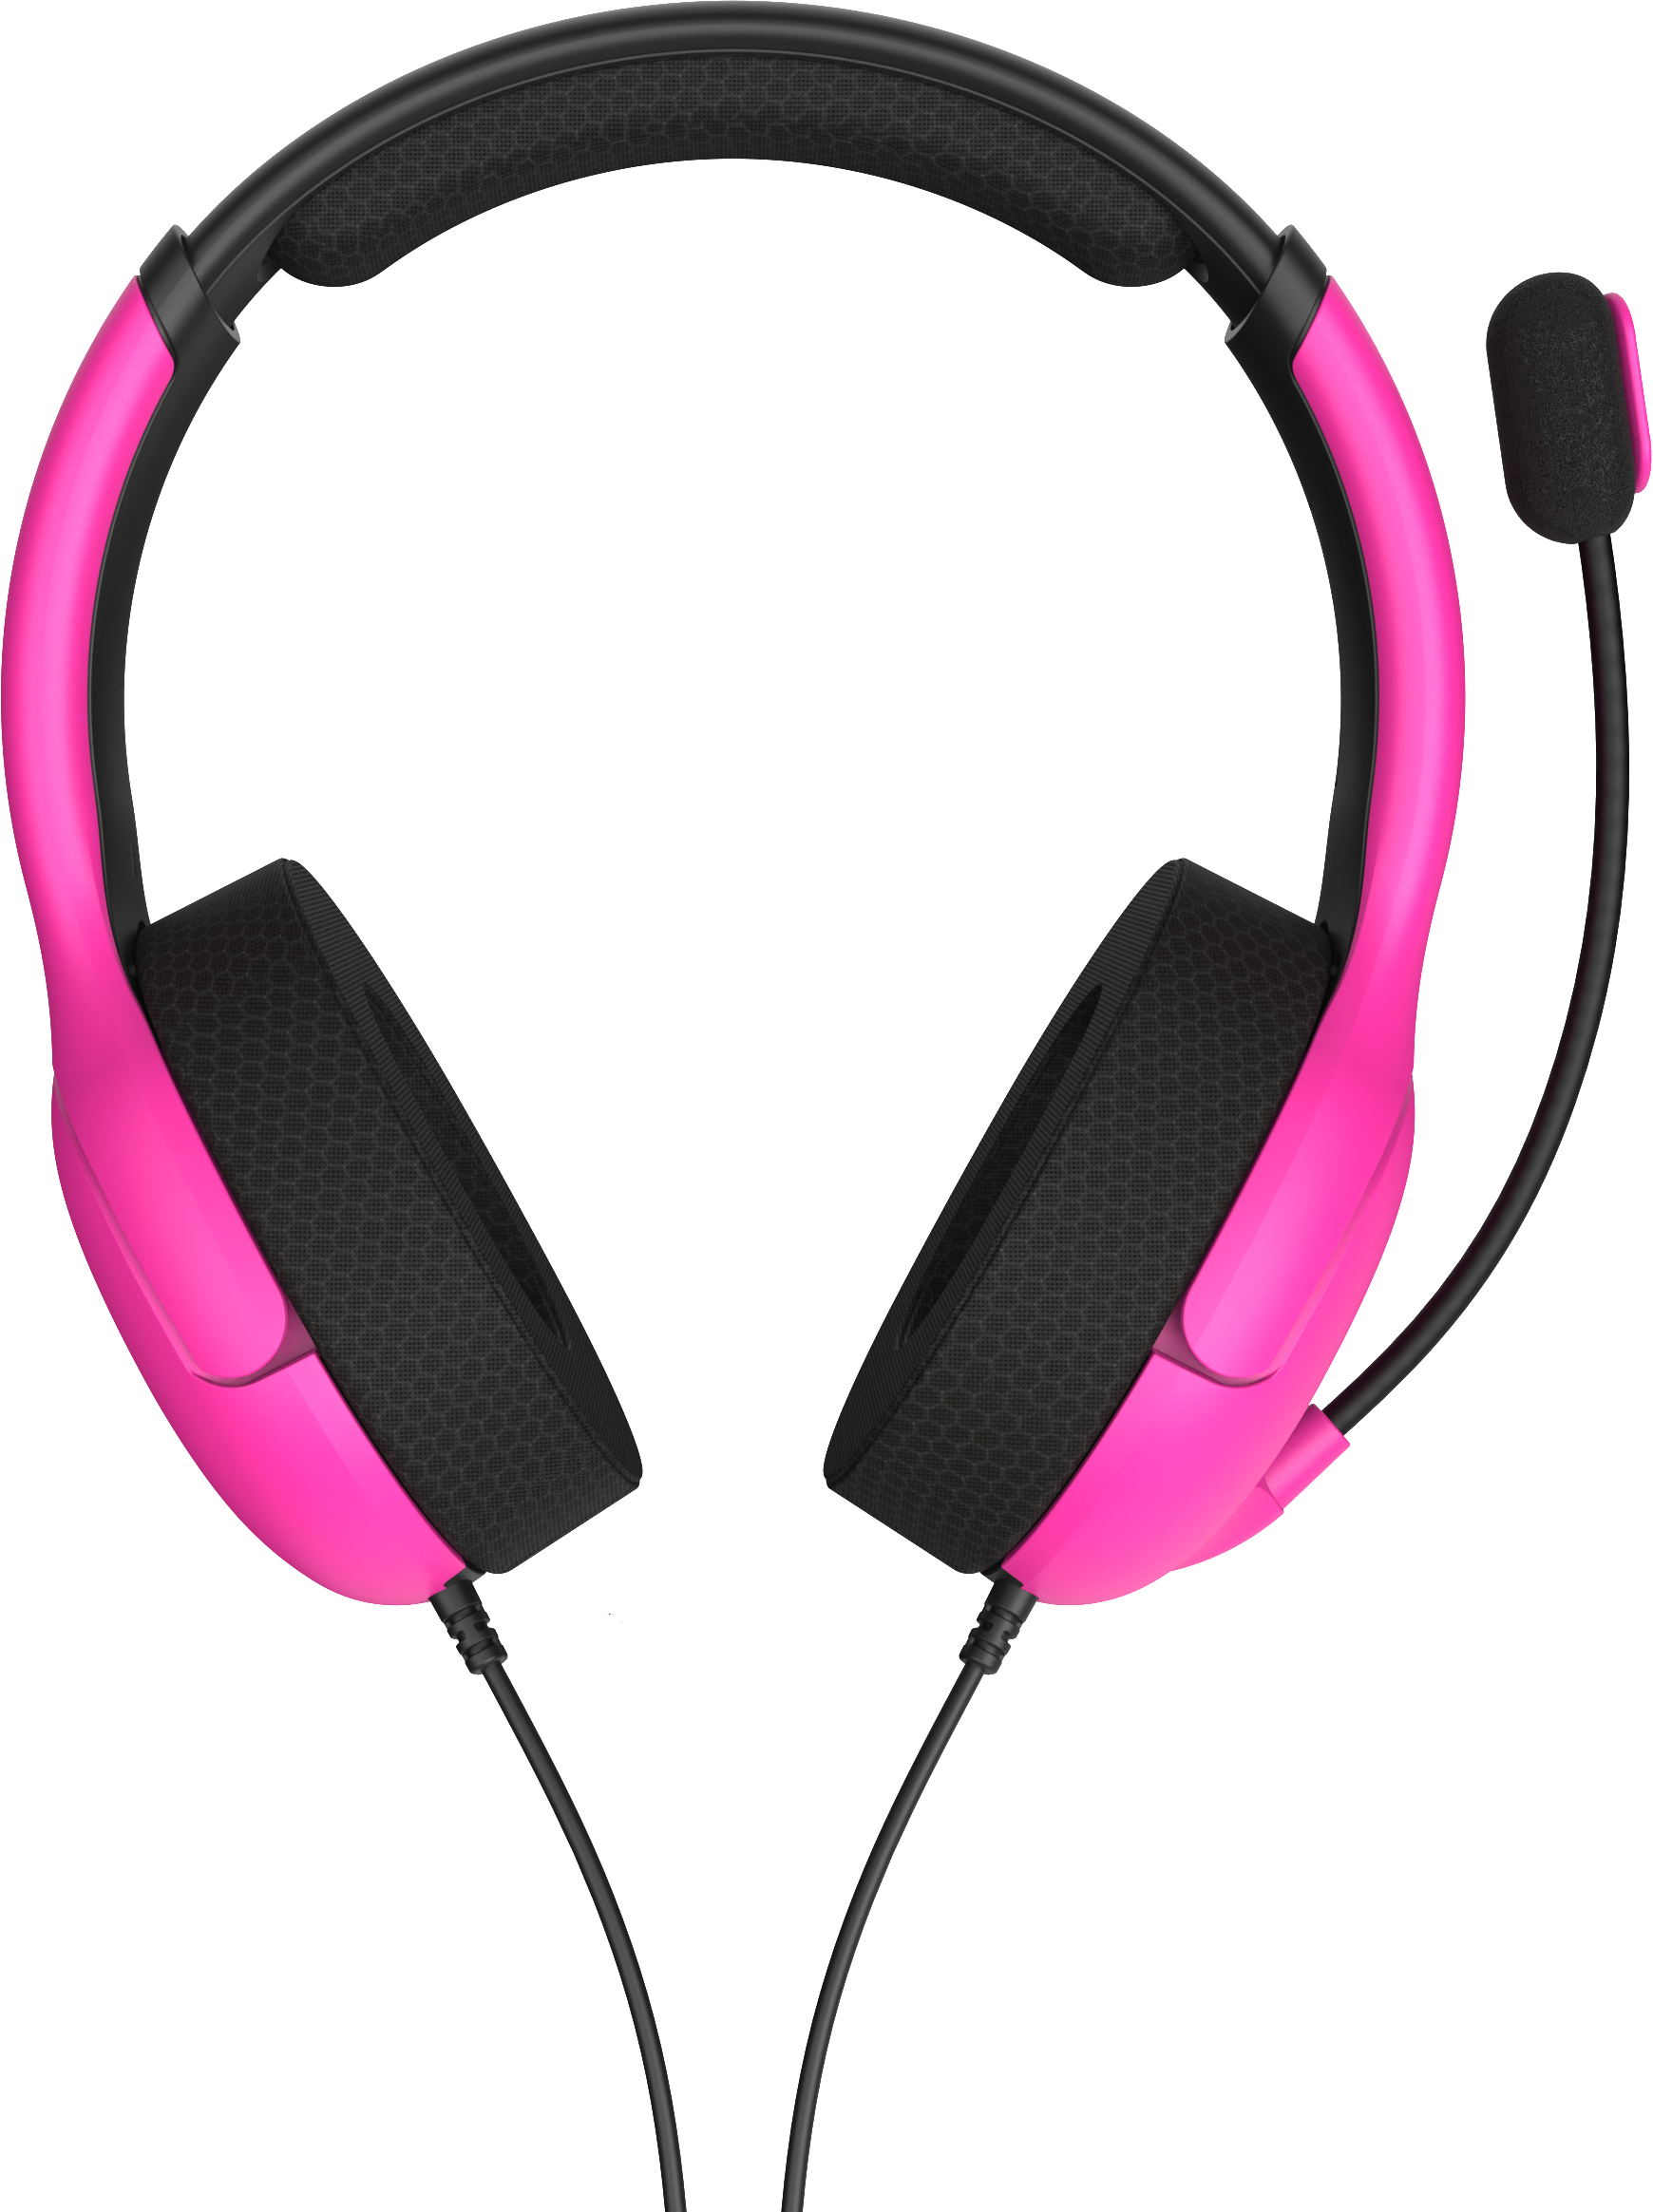 PDP Airlite Wired Stereo Headset 052-011-PK PS5, Nebula Pink PS5, Nebula Pink